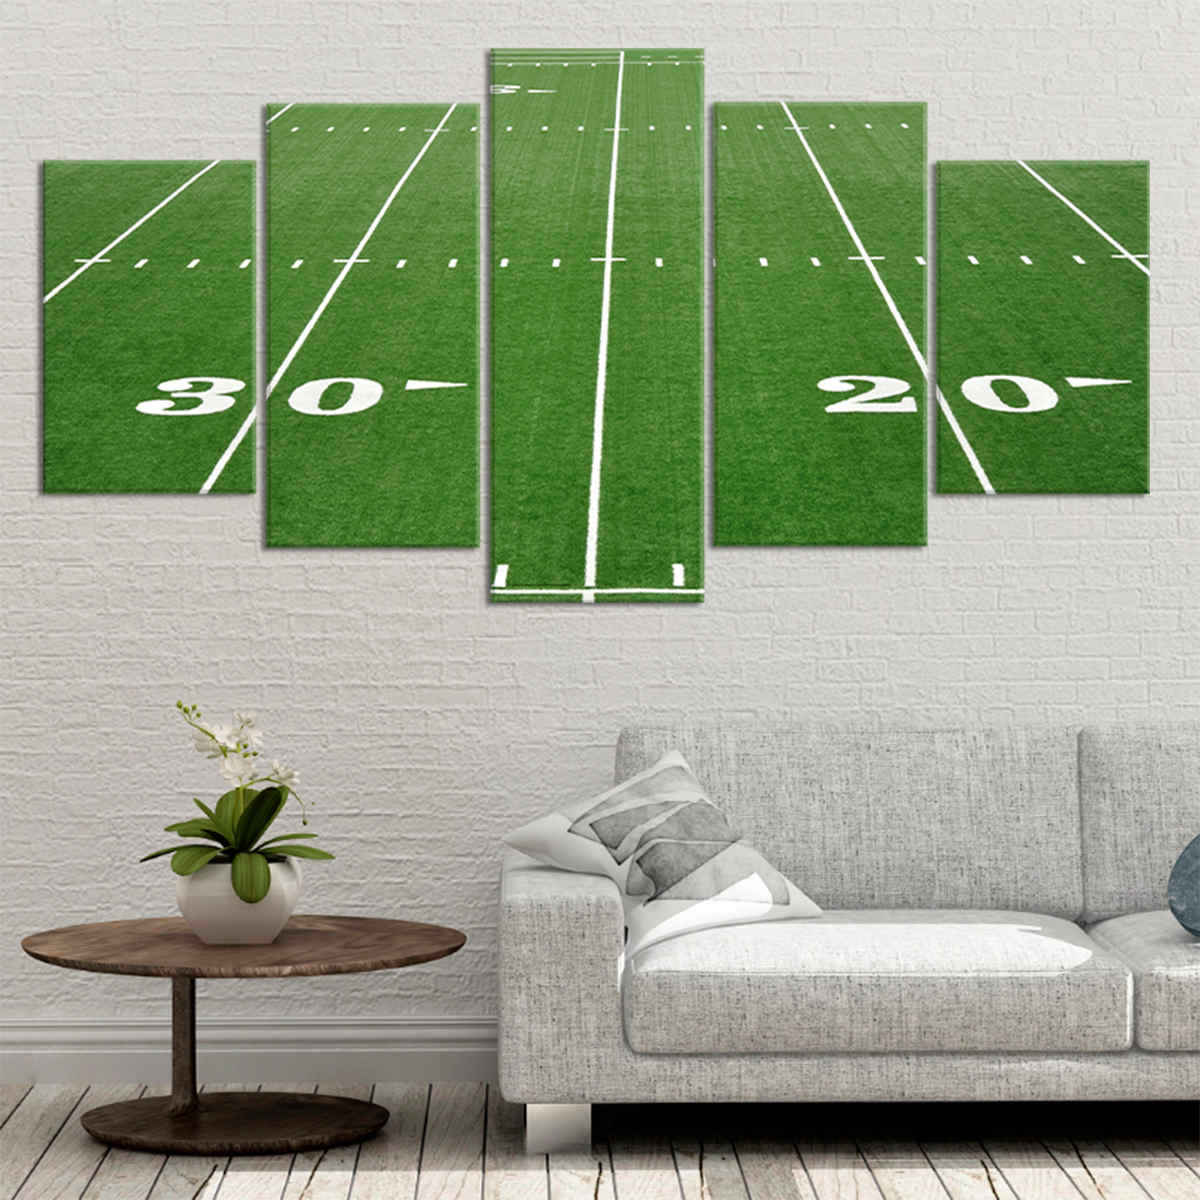 American Football Field Canvas Wall Art